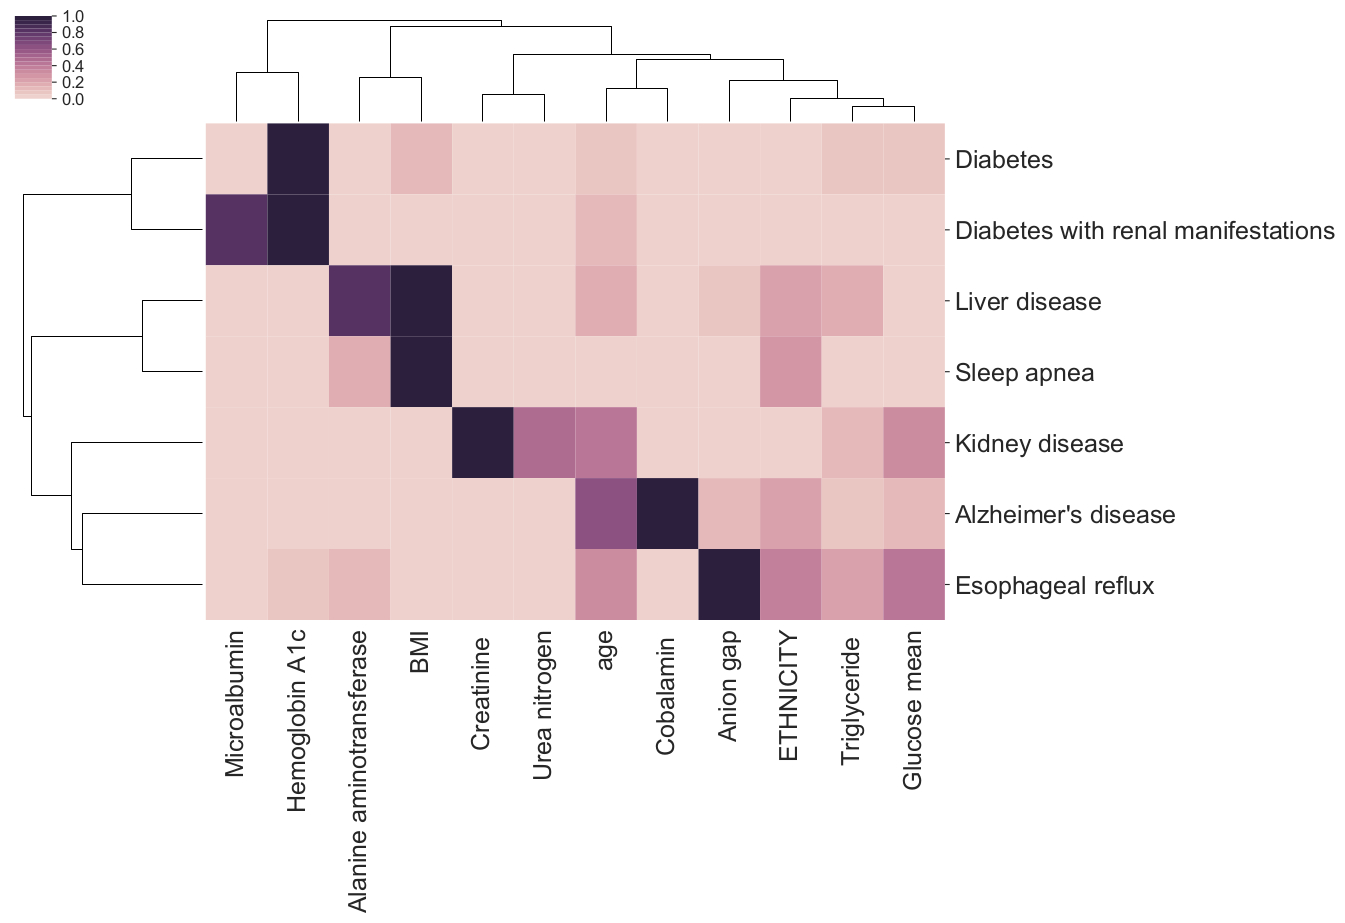 Figure 1. Feature importance bi-clustering across diseases and predictors